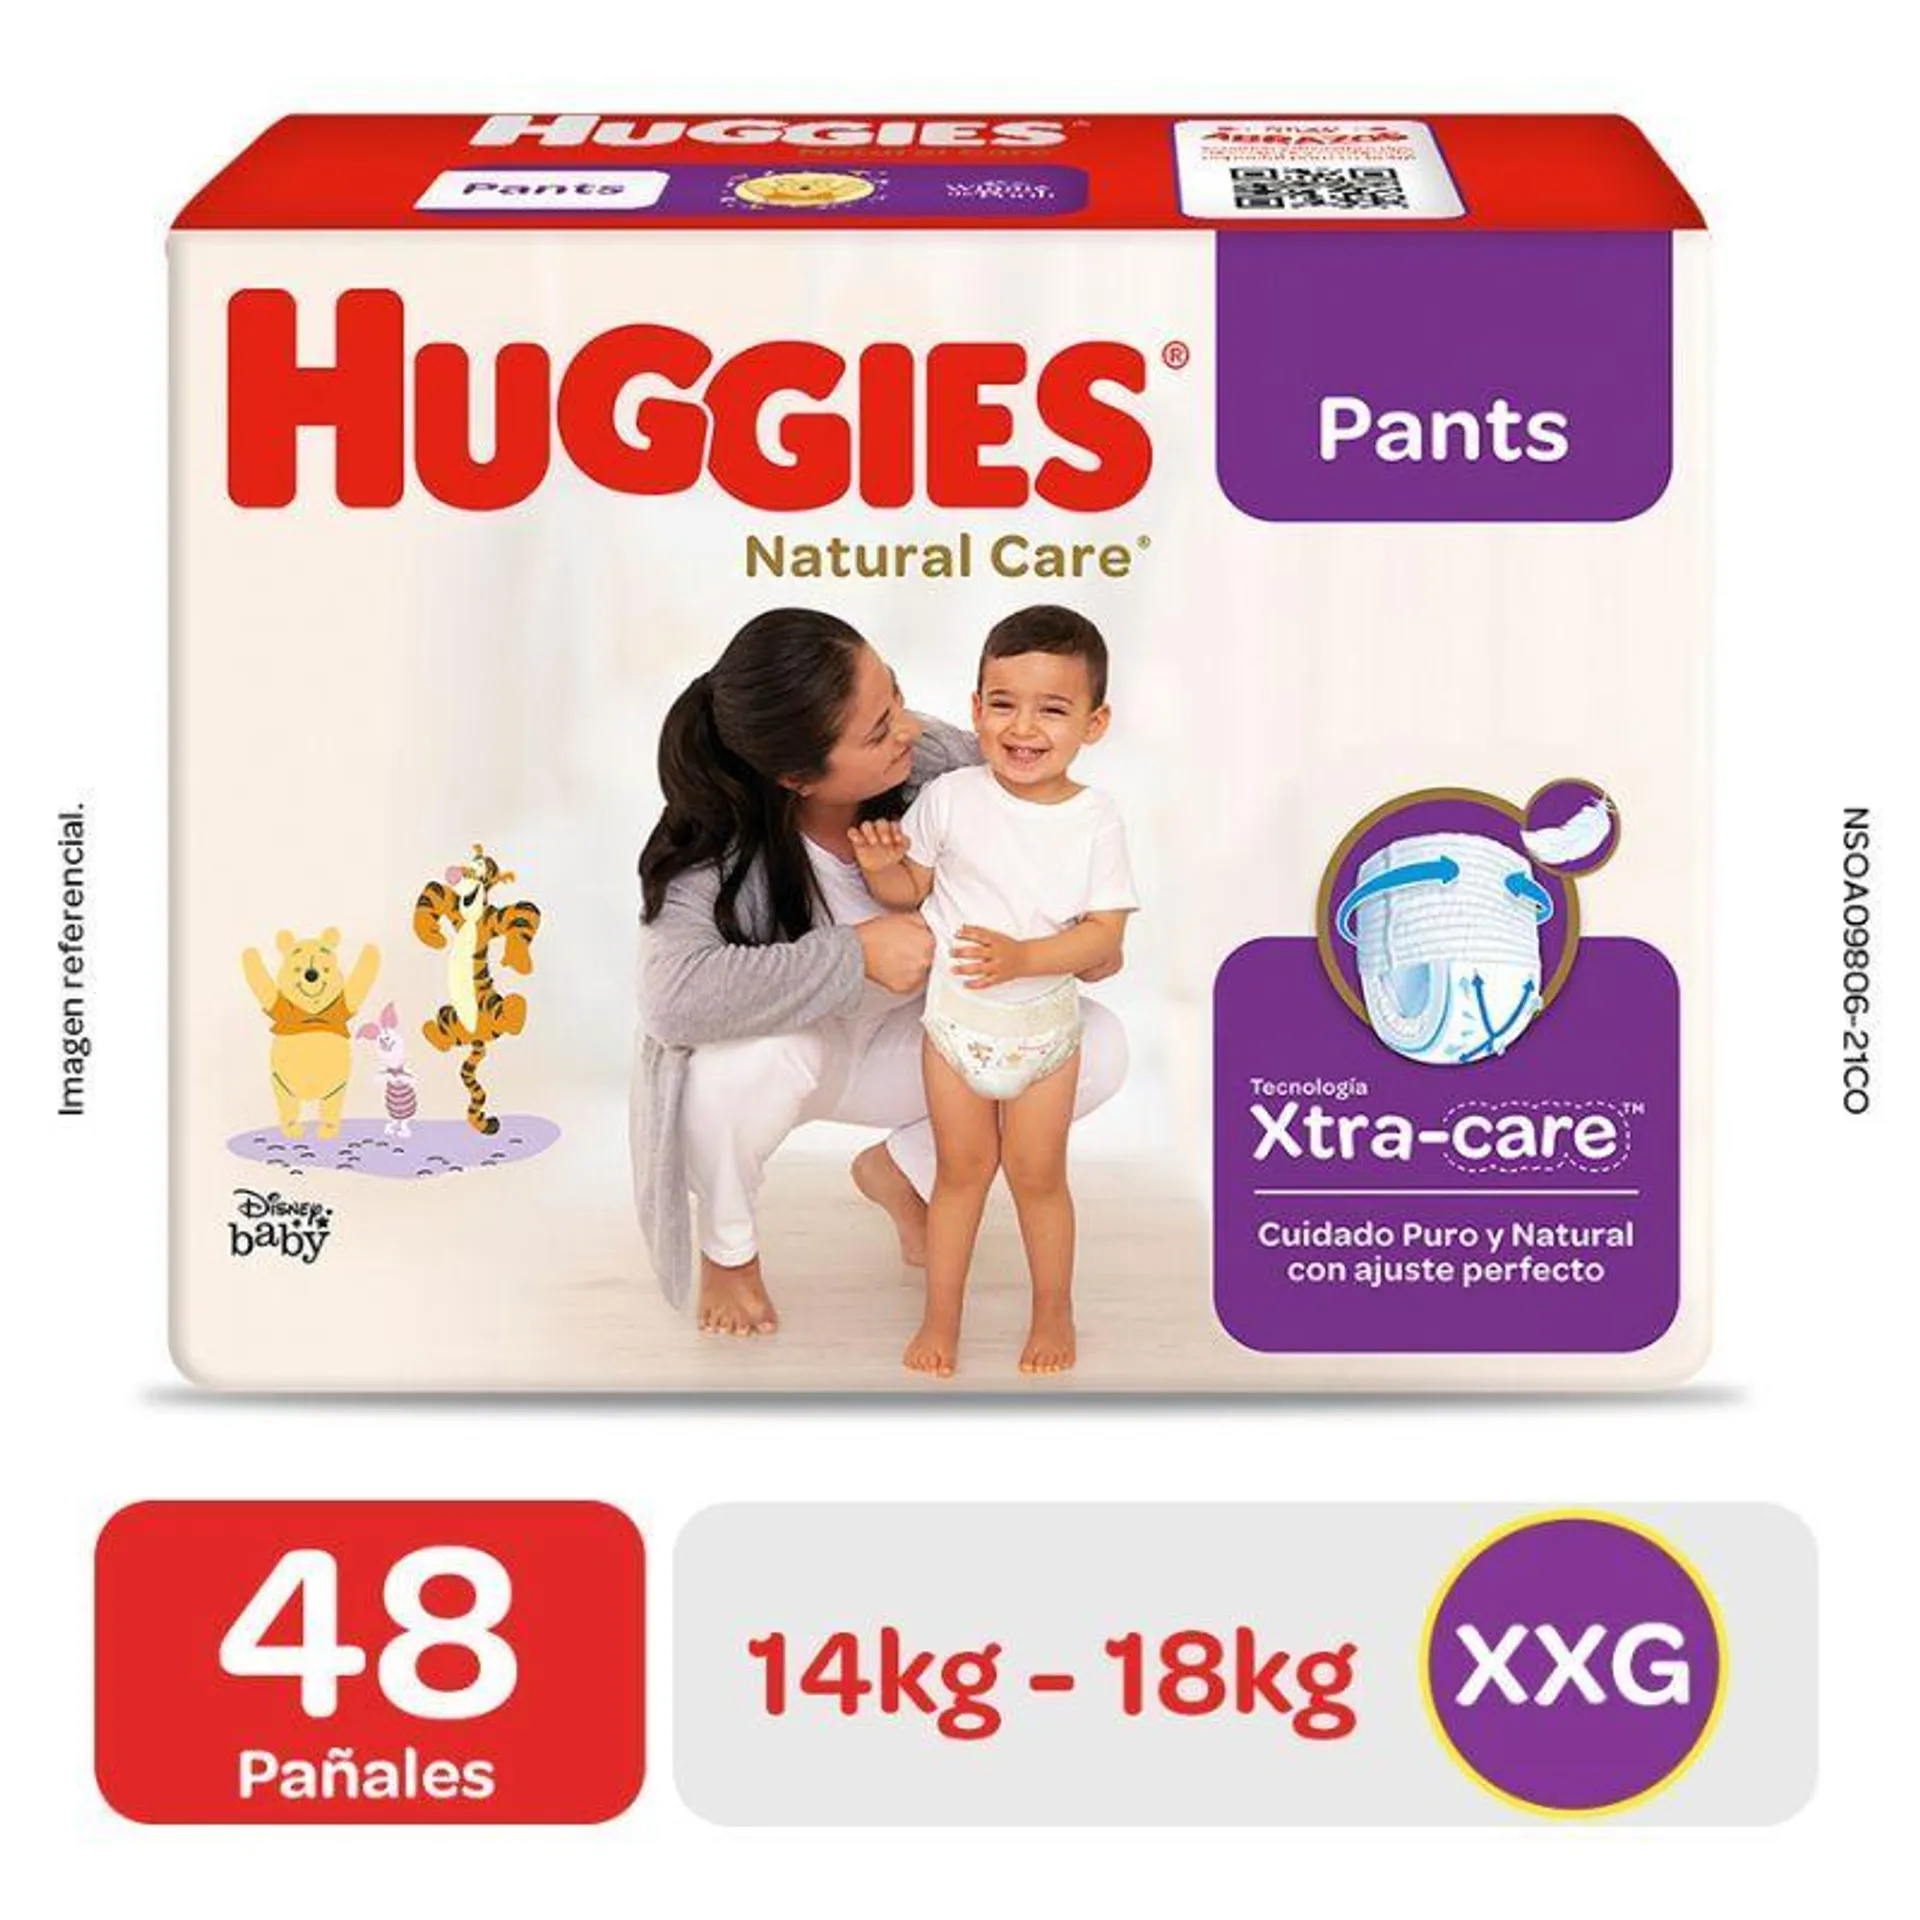 Pañal Huggies Pants Natural Care Talla XXG - Bolsa 48 UN